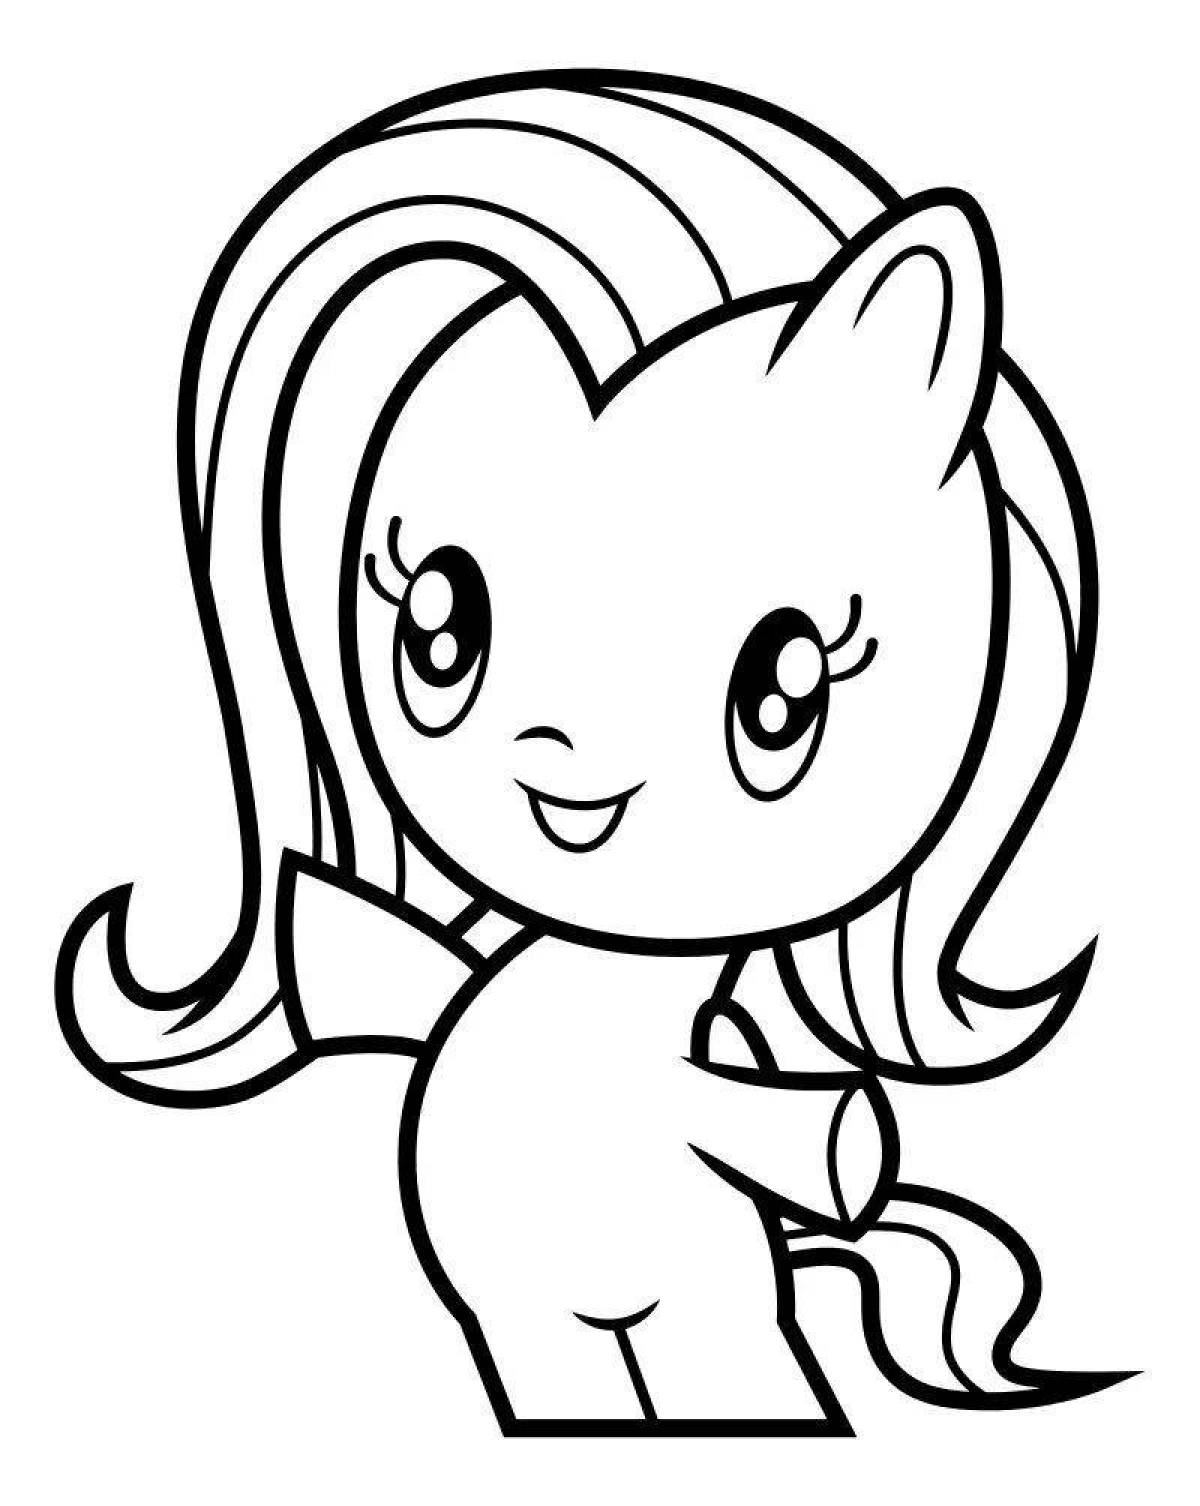 Coloring page joyful mini pony